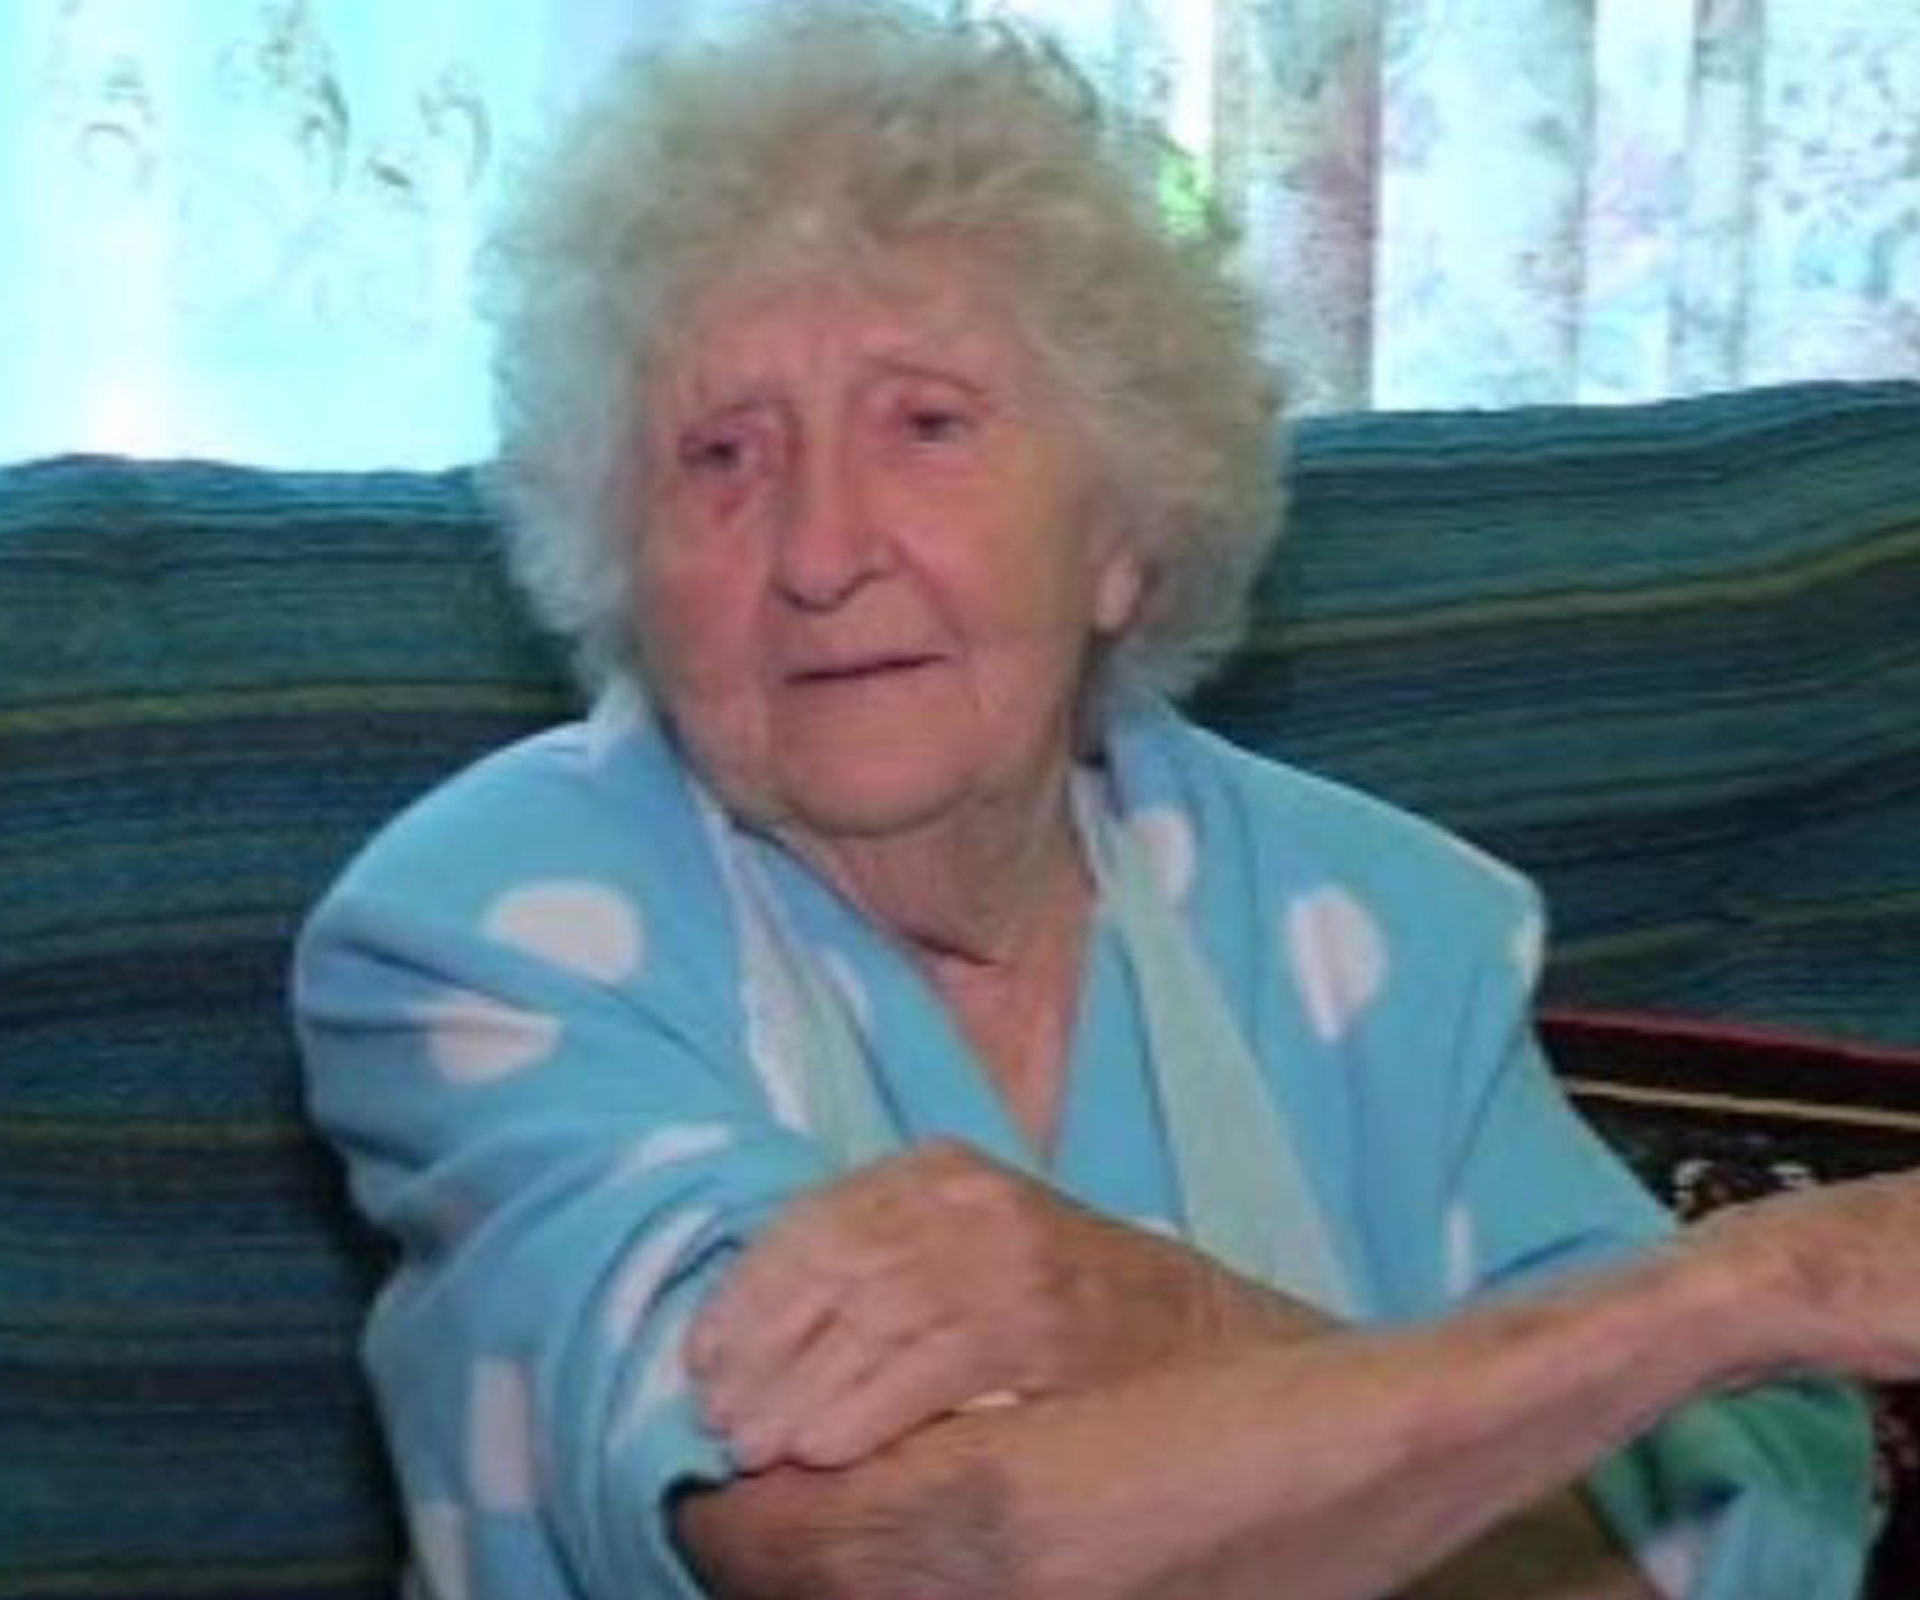 Brave 91-year-old woman fights off burglar